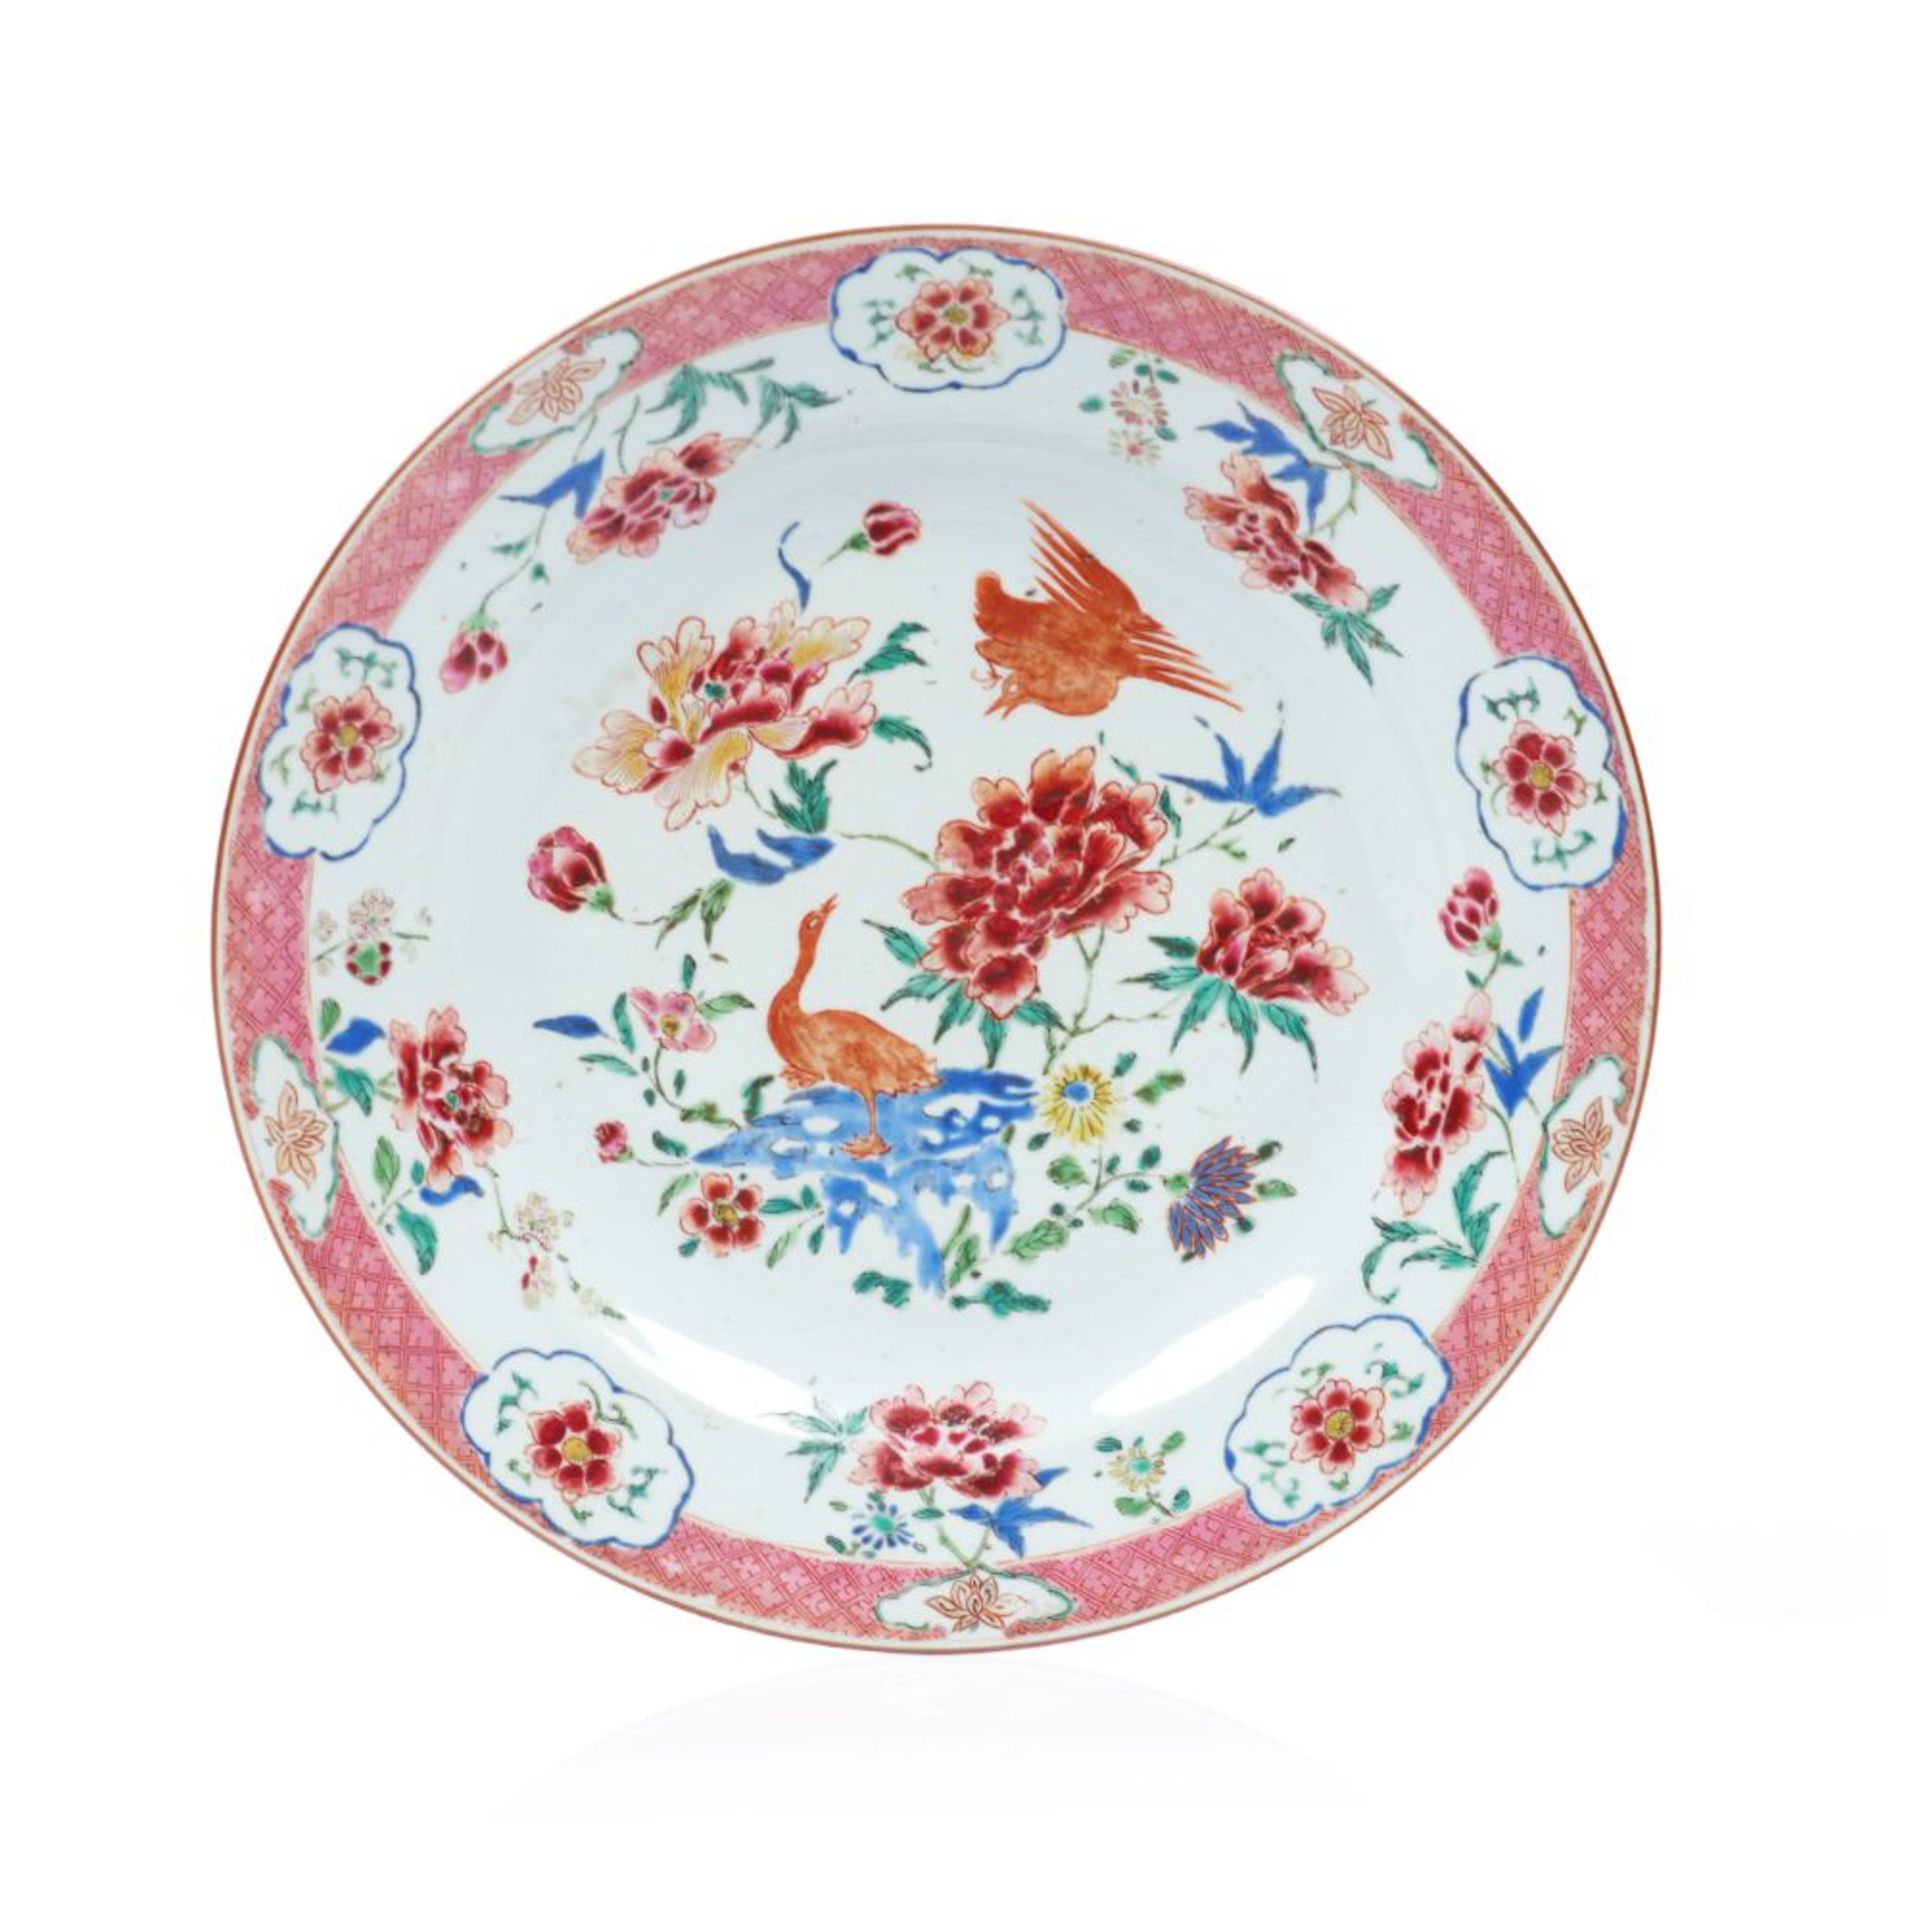 A large plate, Chinese export porcelain, Polychrome "Famille Rose" enamelled decoration of landscape